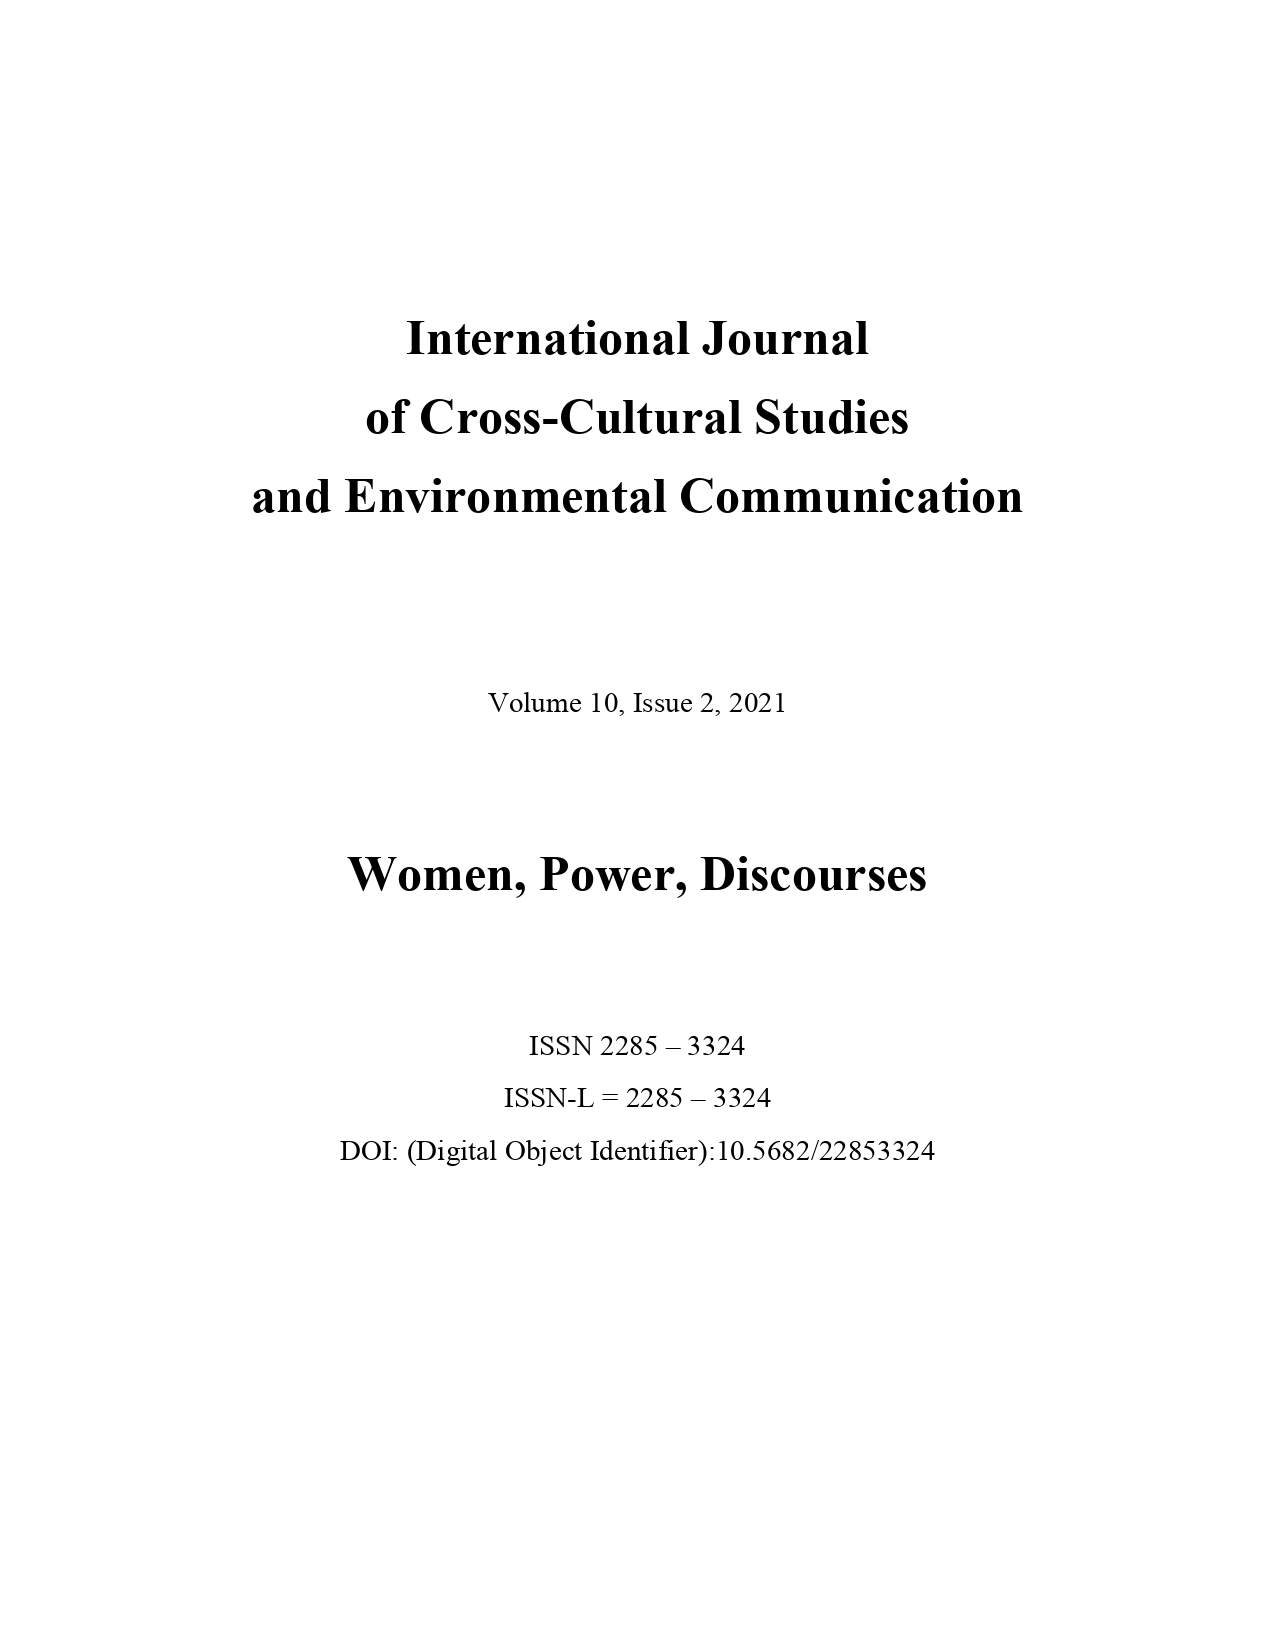 Introduction - Women, Power, Discourses